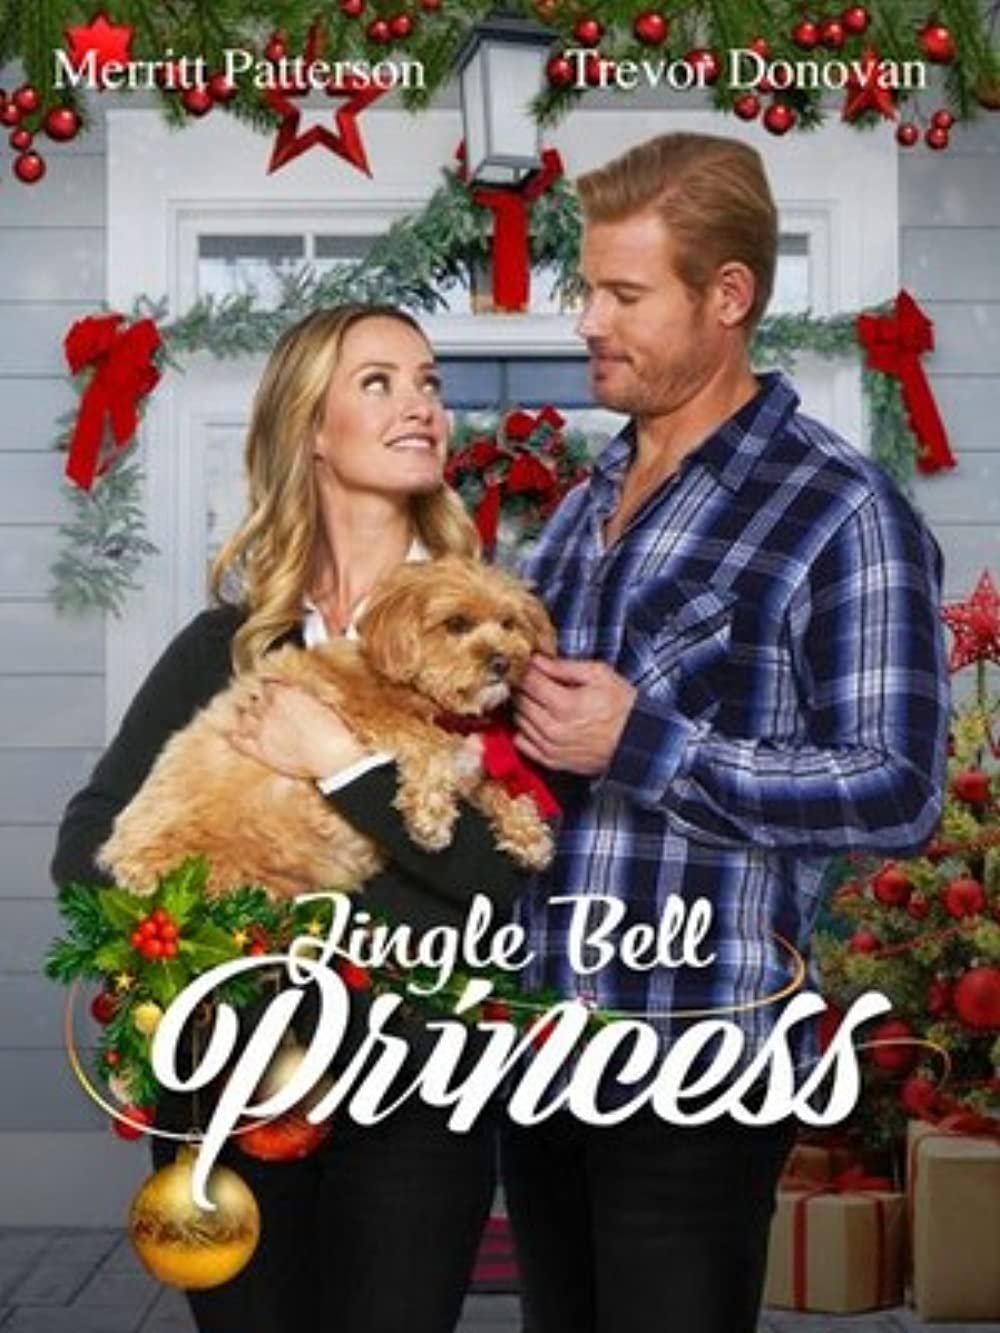 Jingle Bell Princess DVD 2021 GAC Movie Merritt Patterson Trevor Donovan